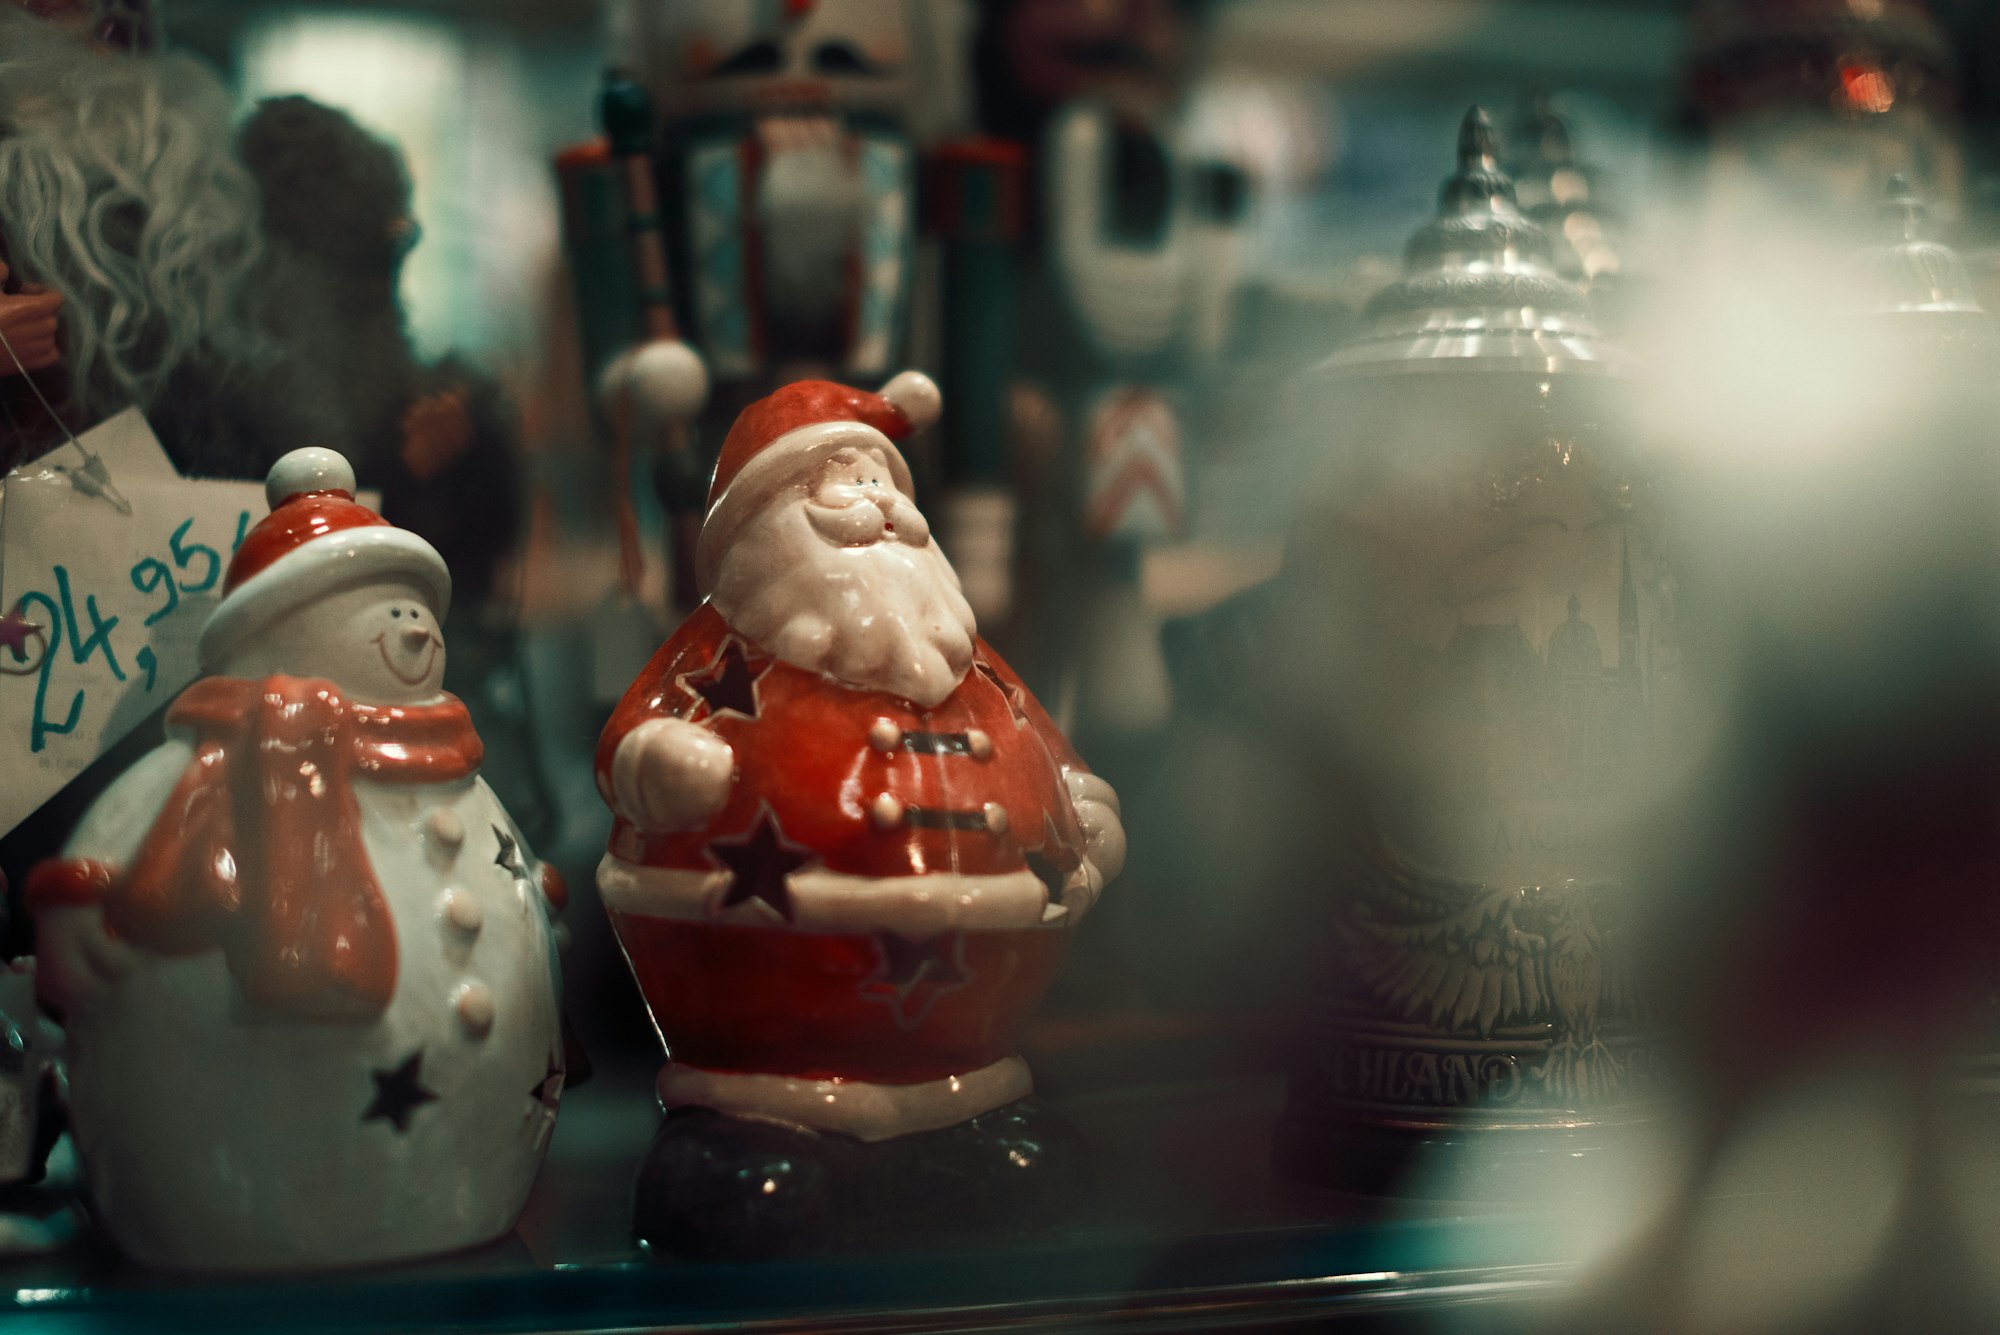 Winter holiday figures like Santa and a snowman on retail shop window shelf.